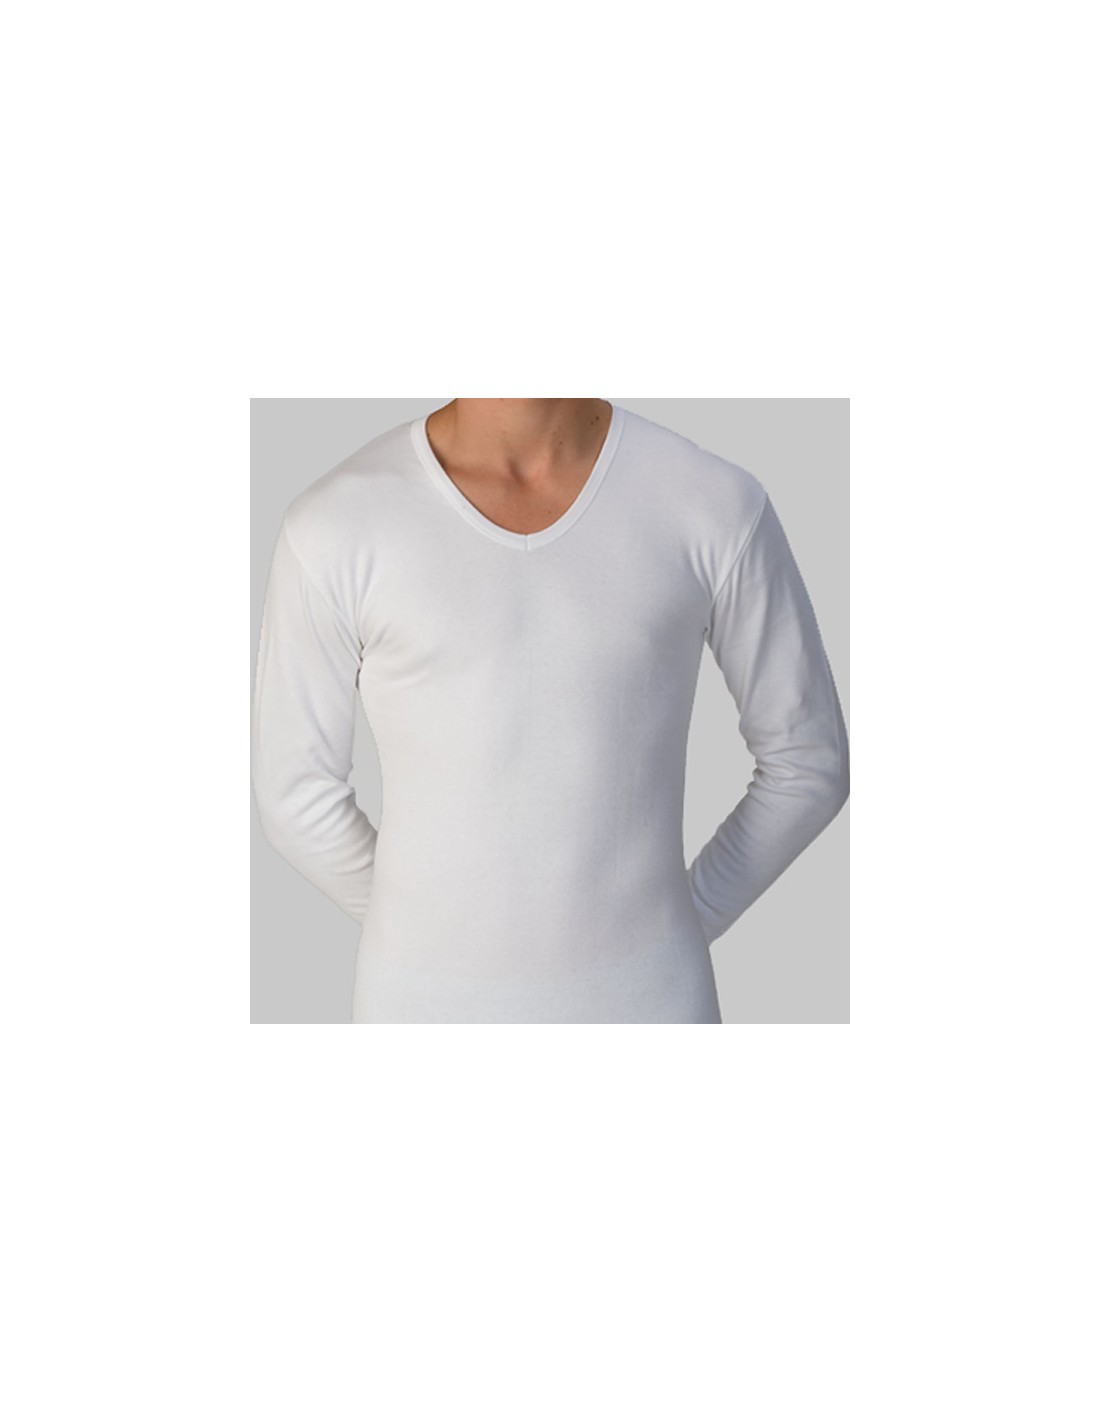 Camiseta 100% algodón manga corta (FELPA INTERIOR)